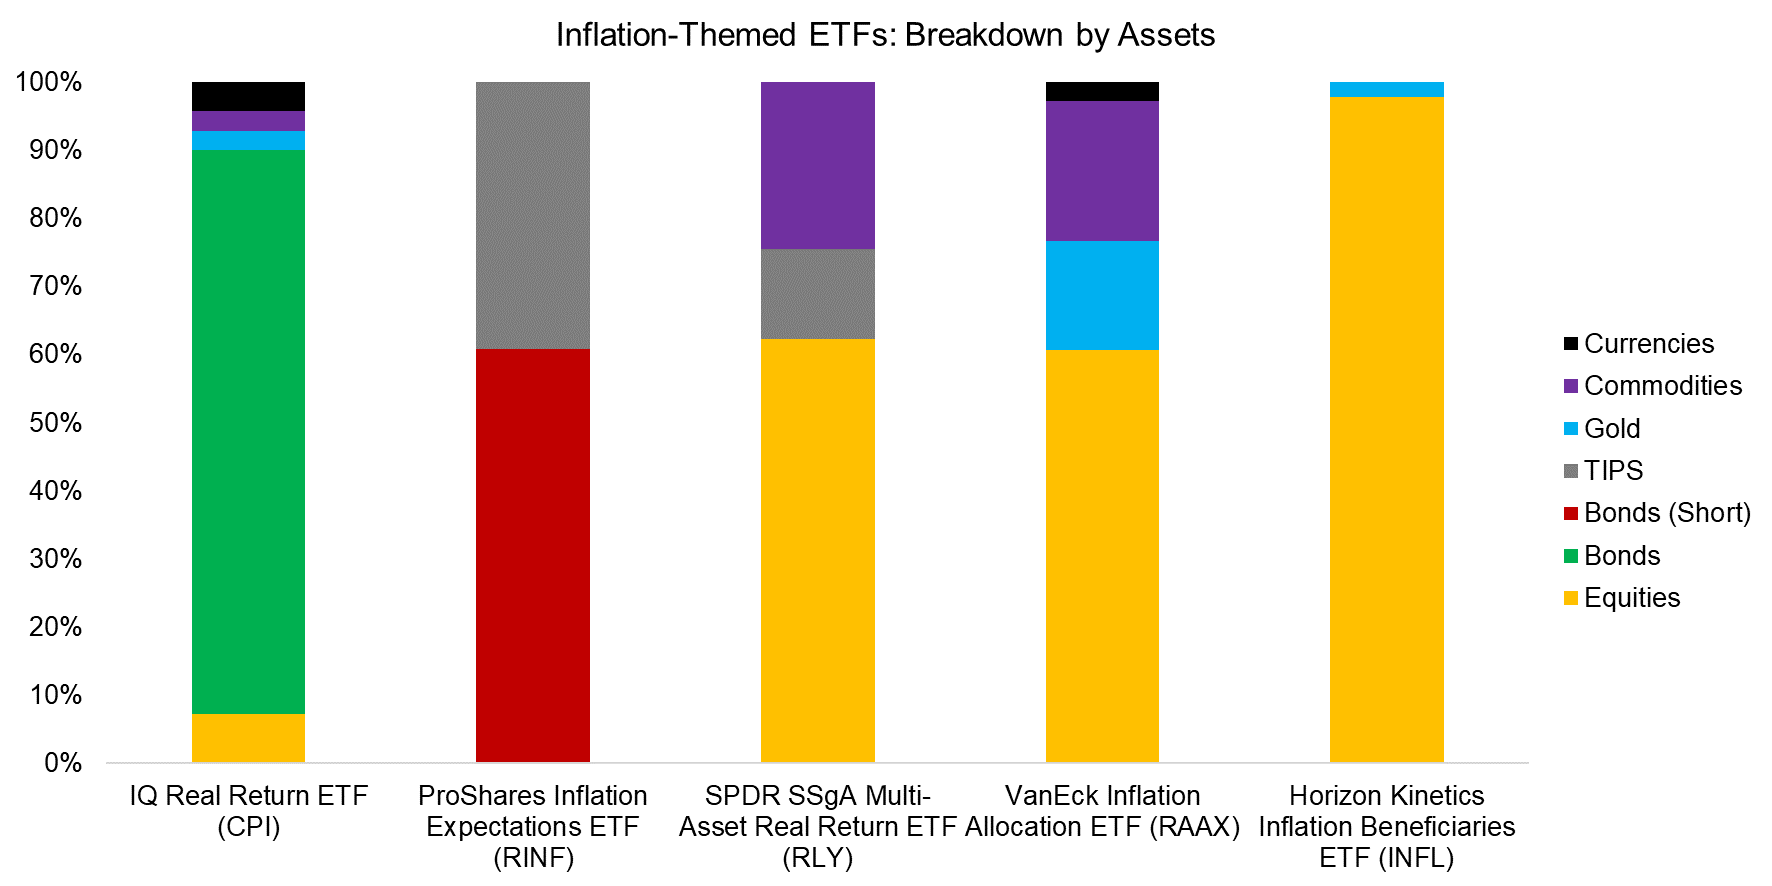 Inflation-Themed ETFs Breakdown by Assets